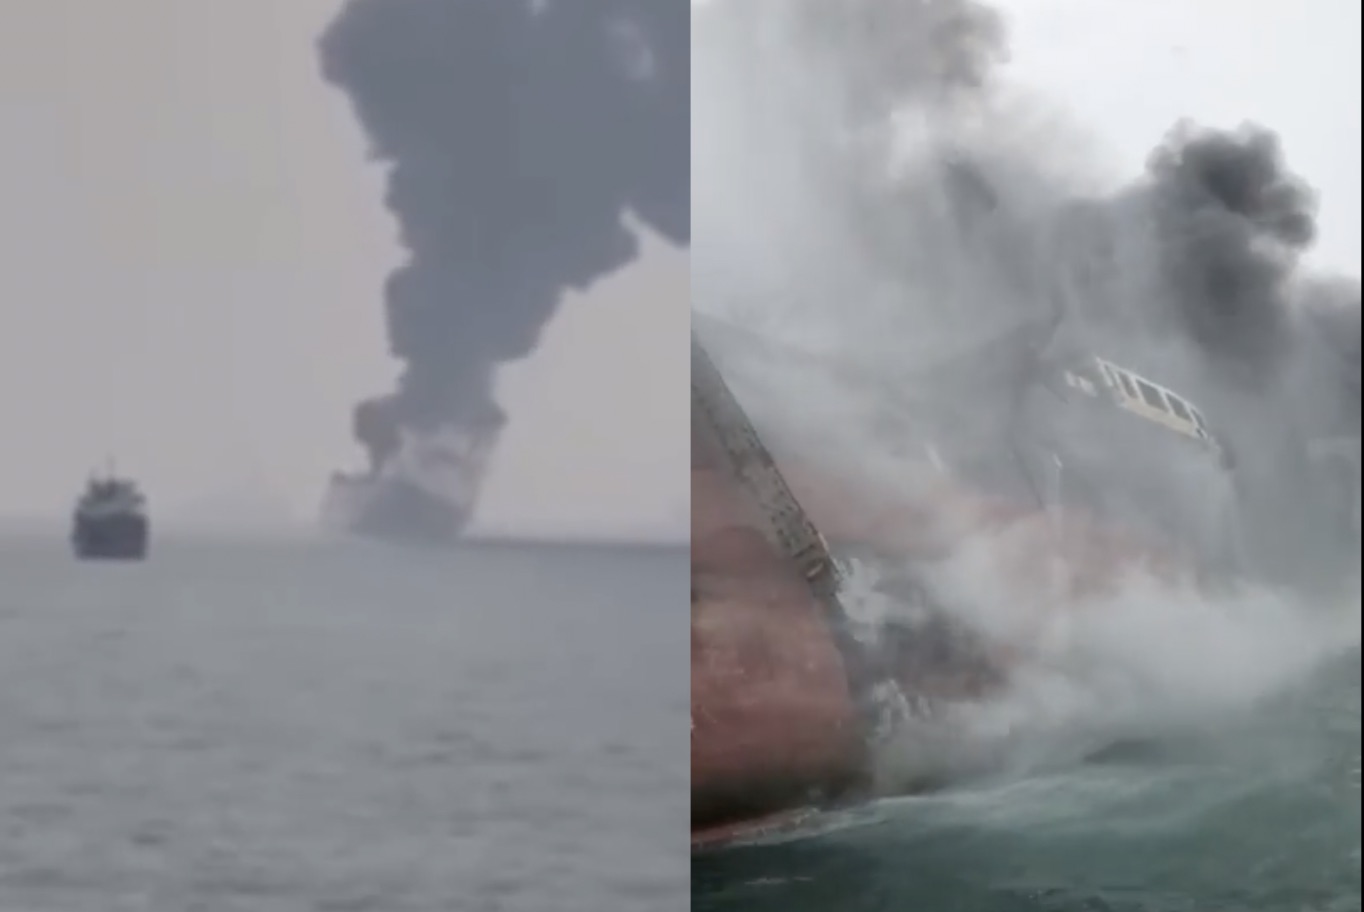 Screengrabs via YouTube. Social media video opf the oil tanker on fire off the coast of Lamma Island. Screengrabs via YouTube.